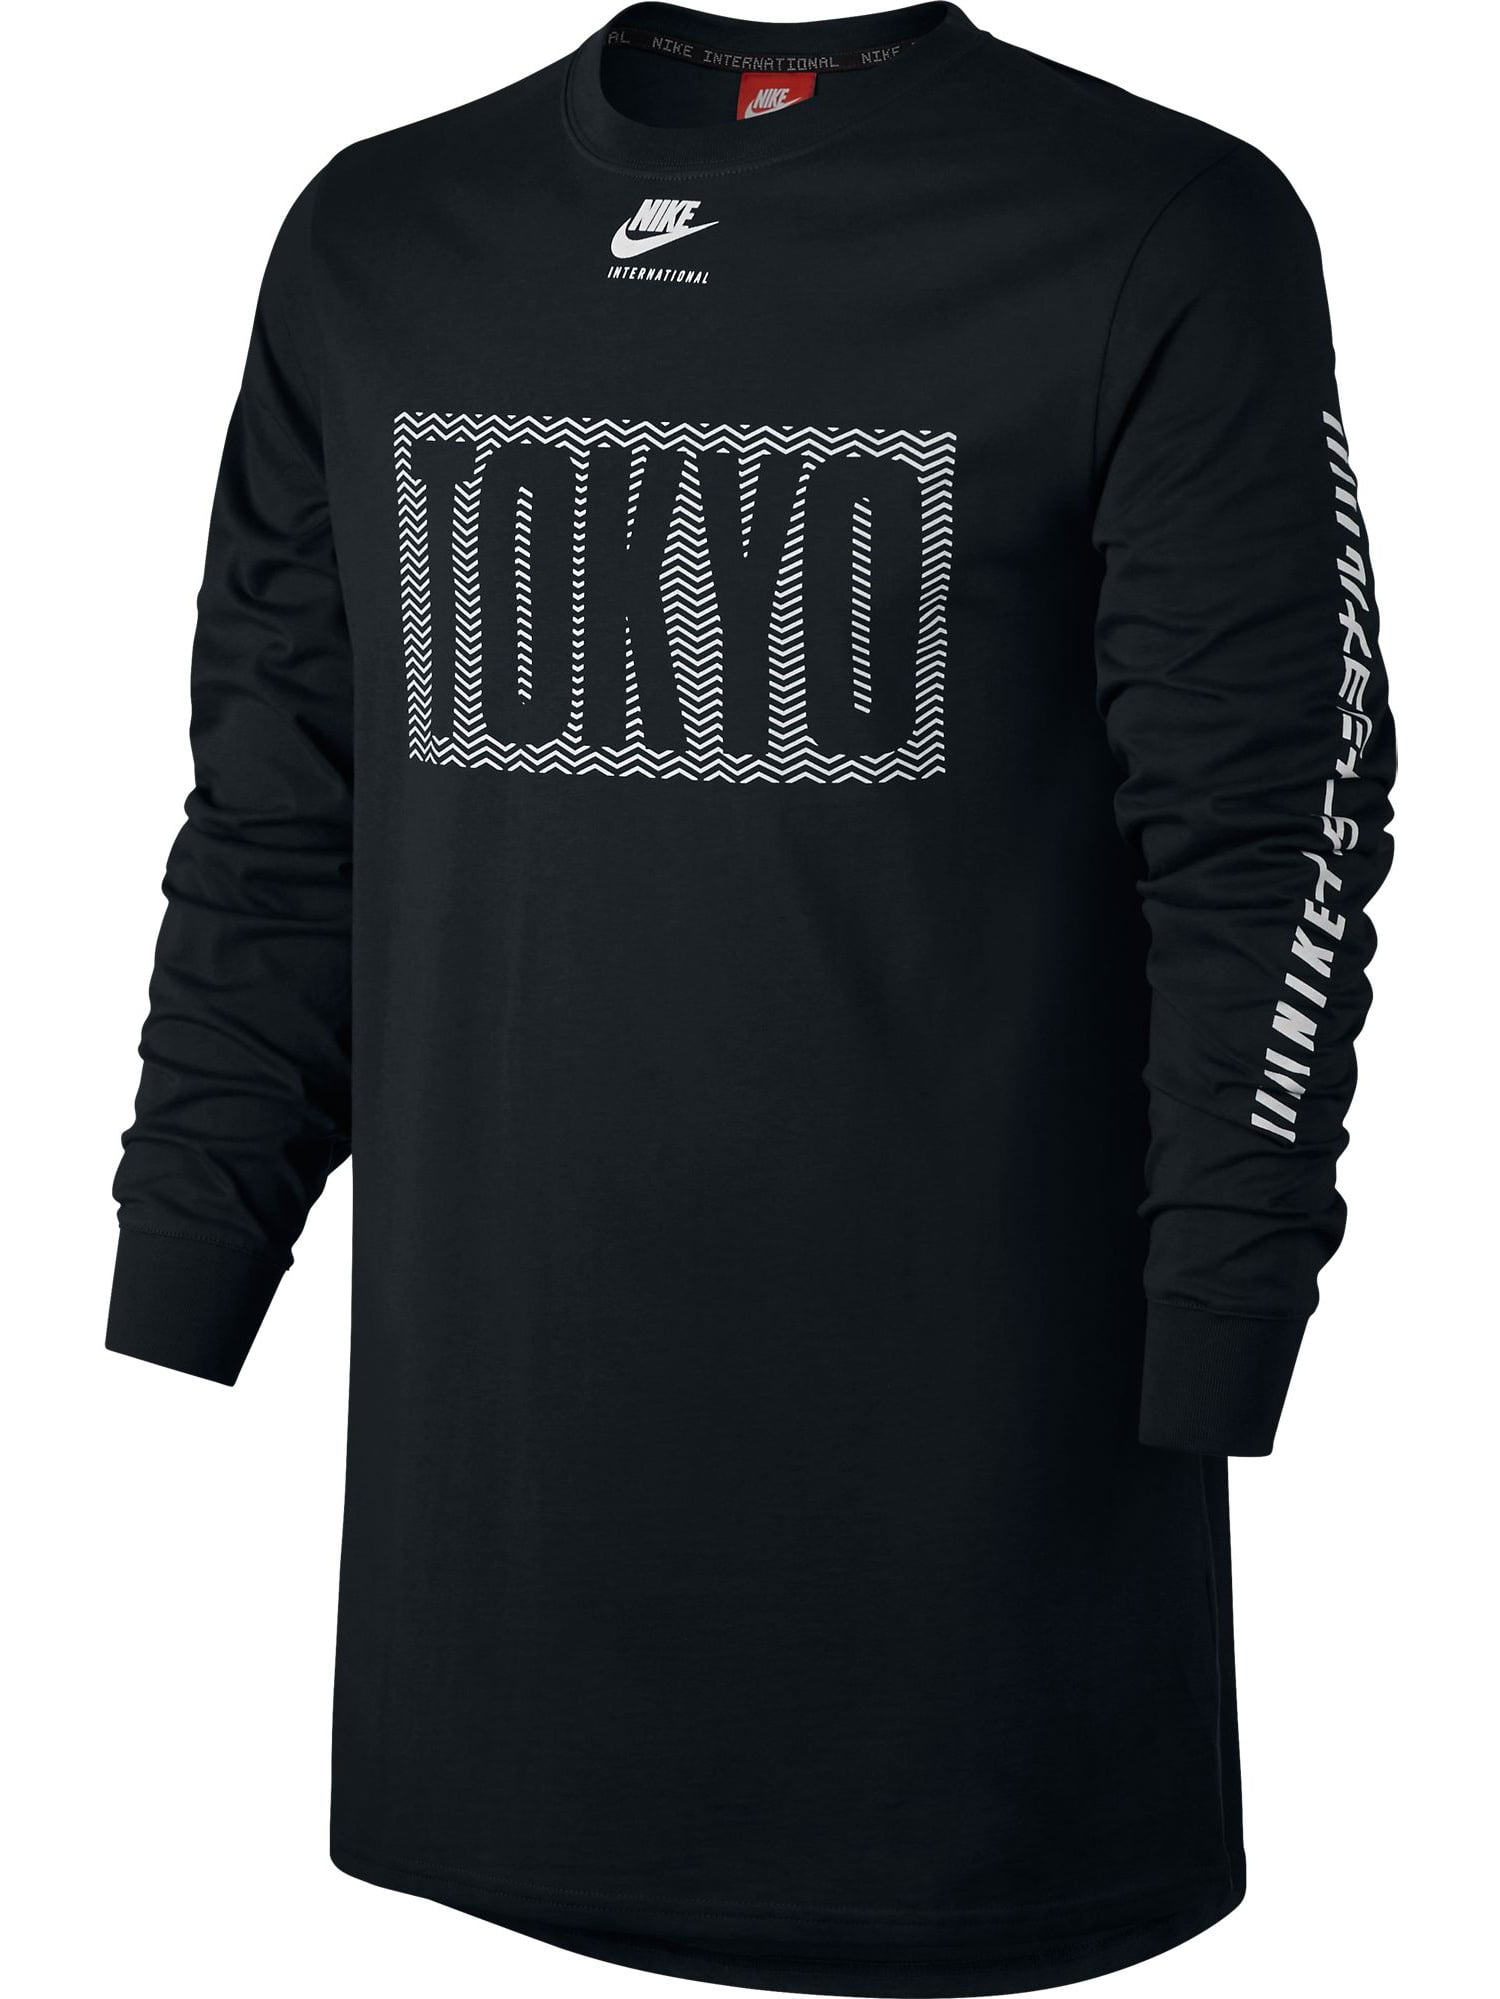 Nike - Nike Tokyo International Men's Longsleeve T-Shirt Black/White ...